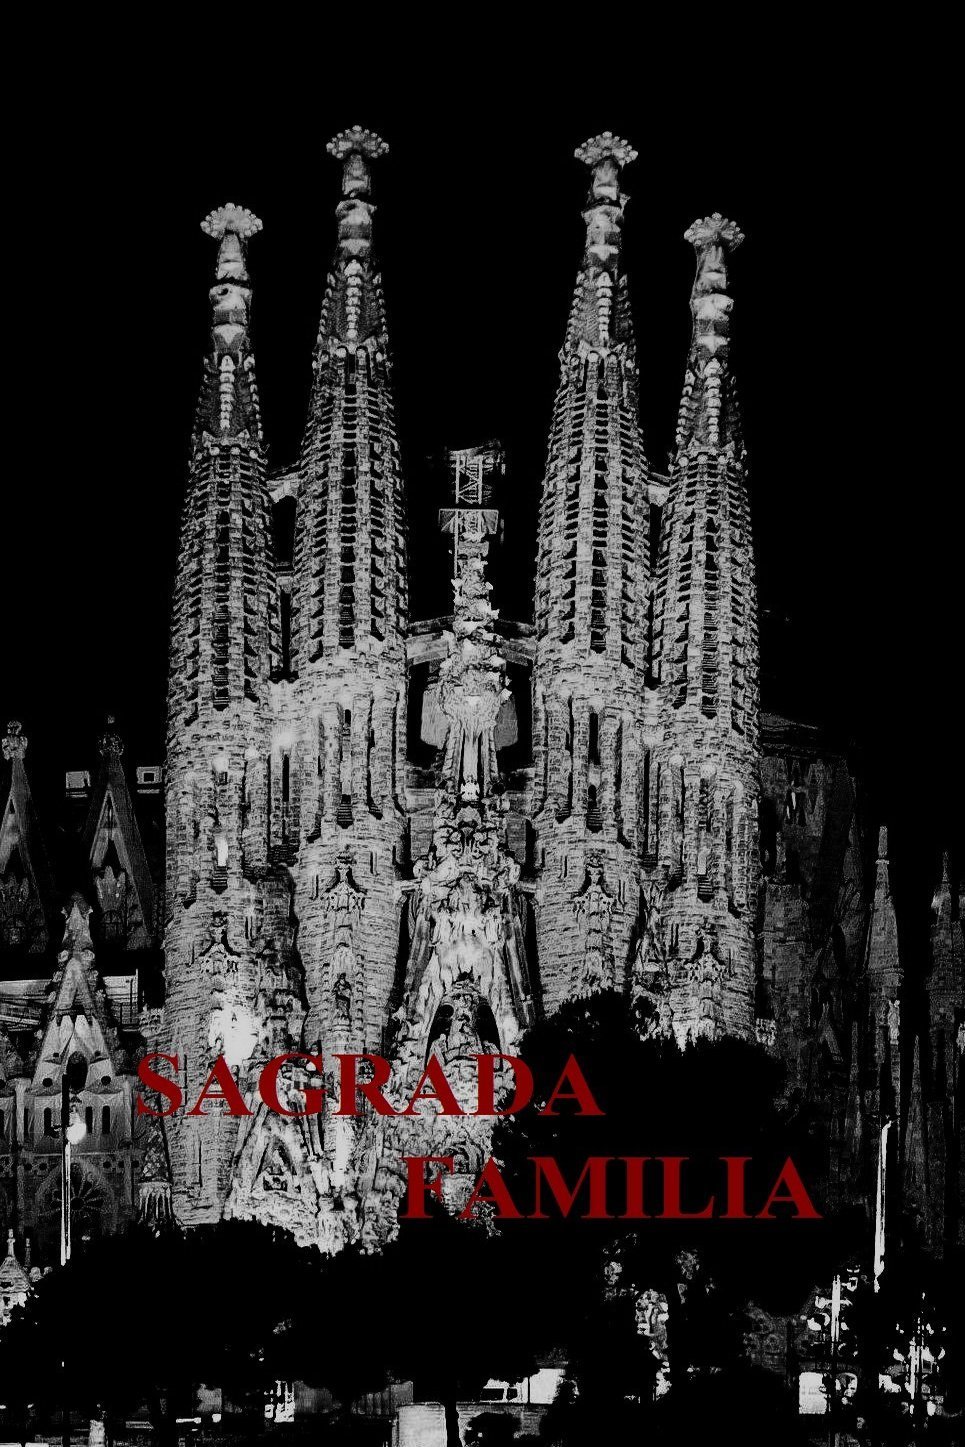 Spanish poster of the movie Sagrada familia